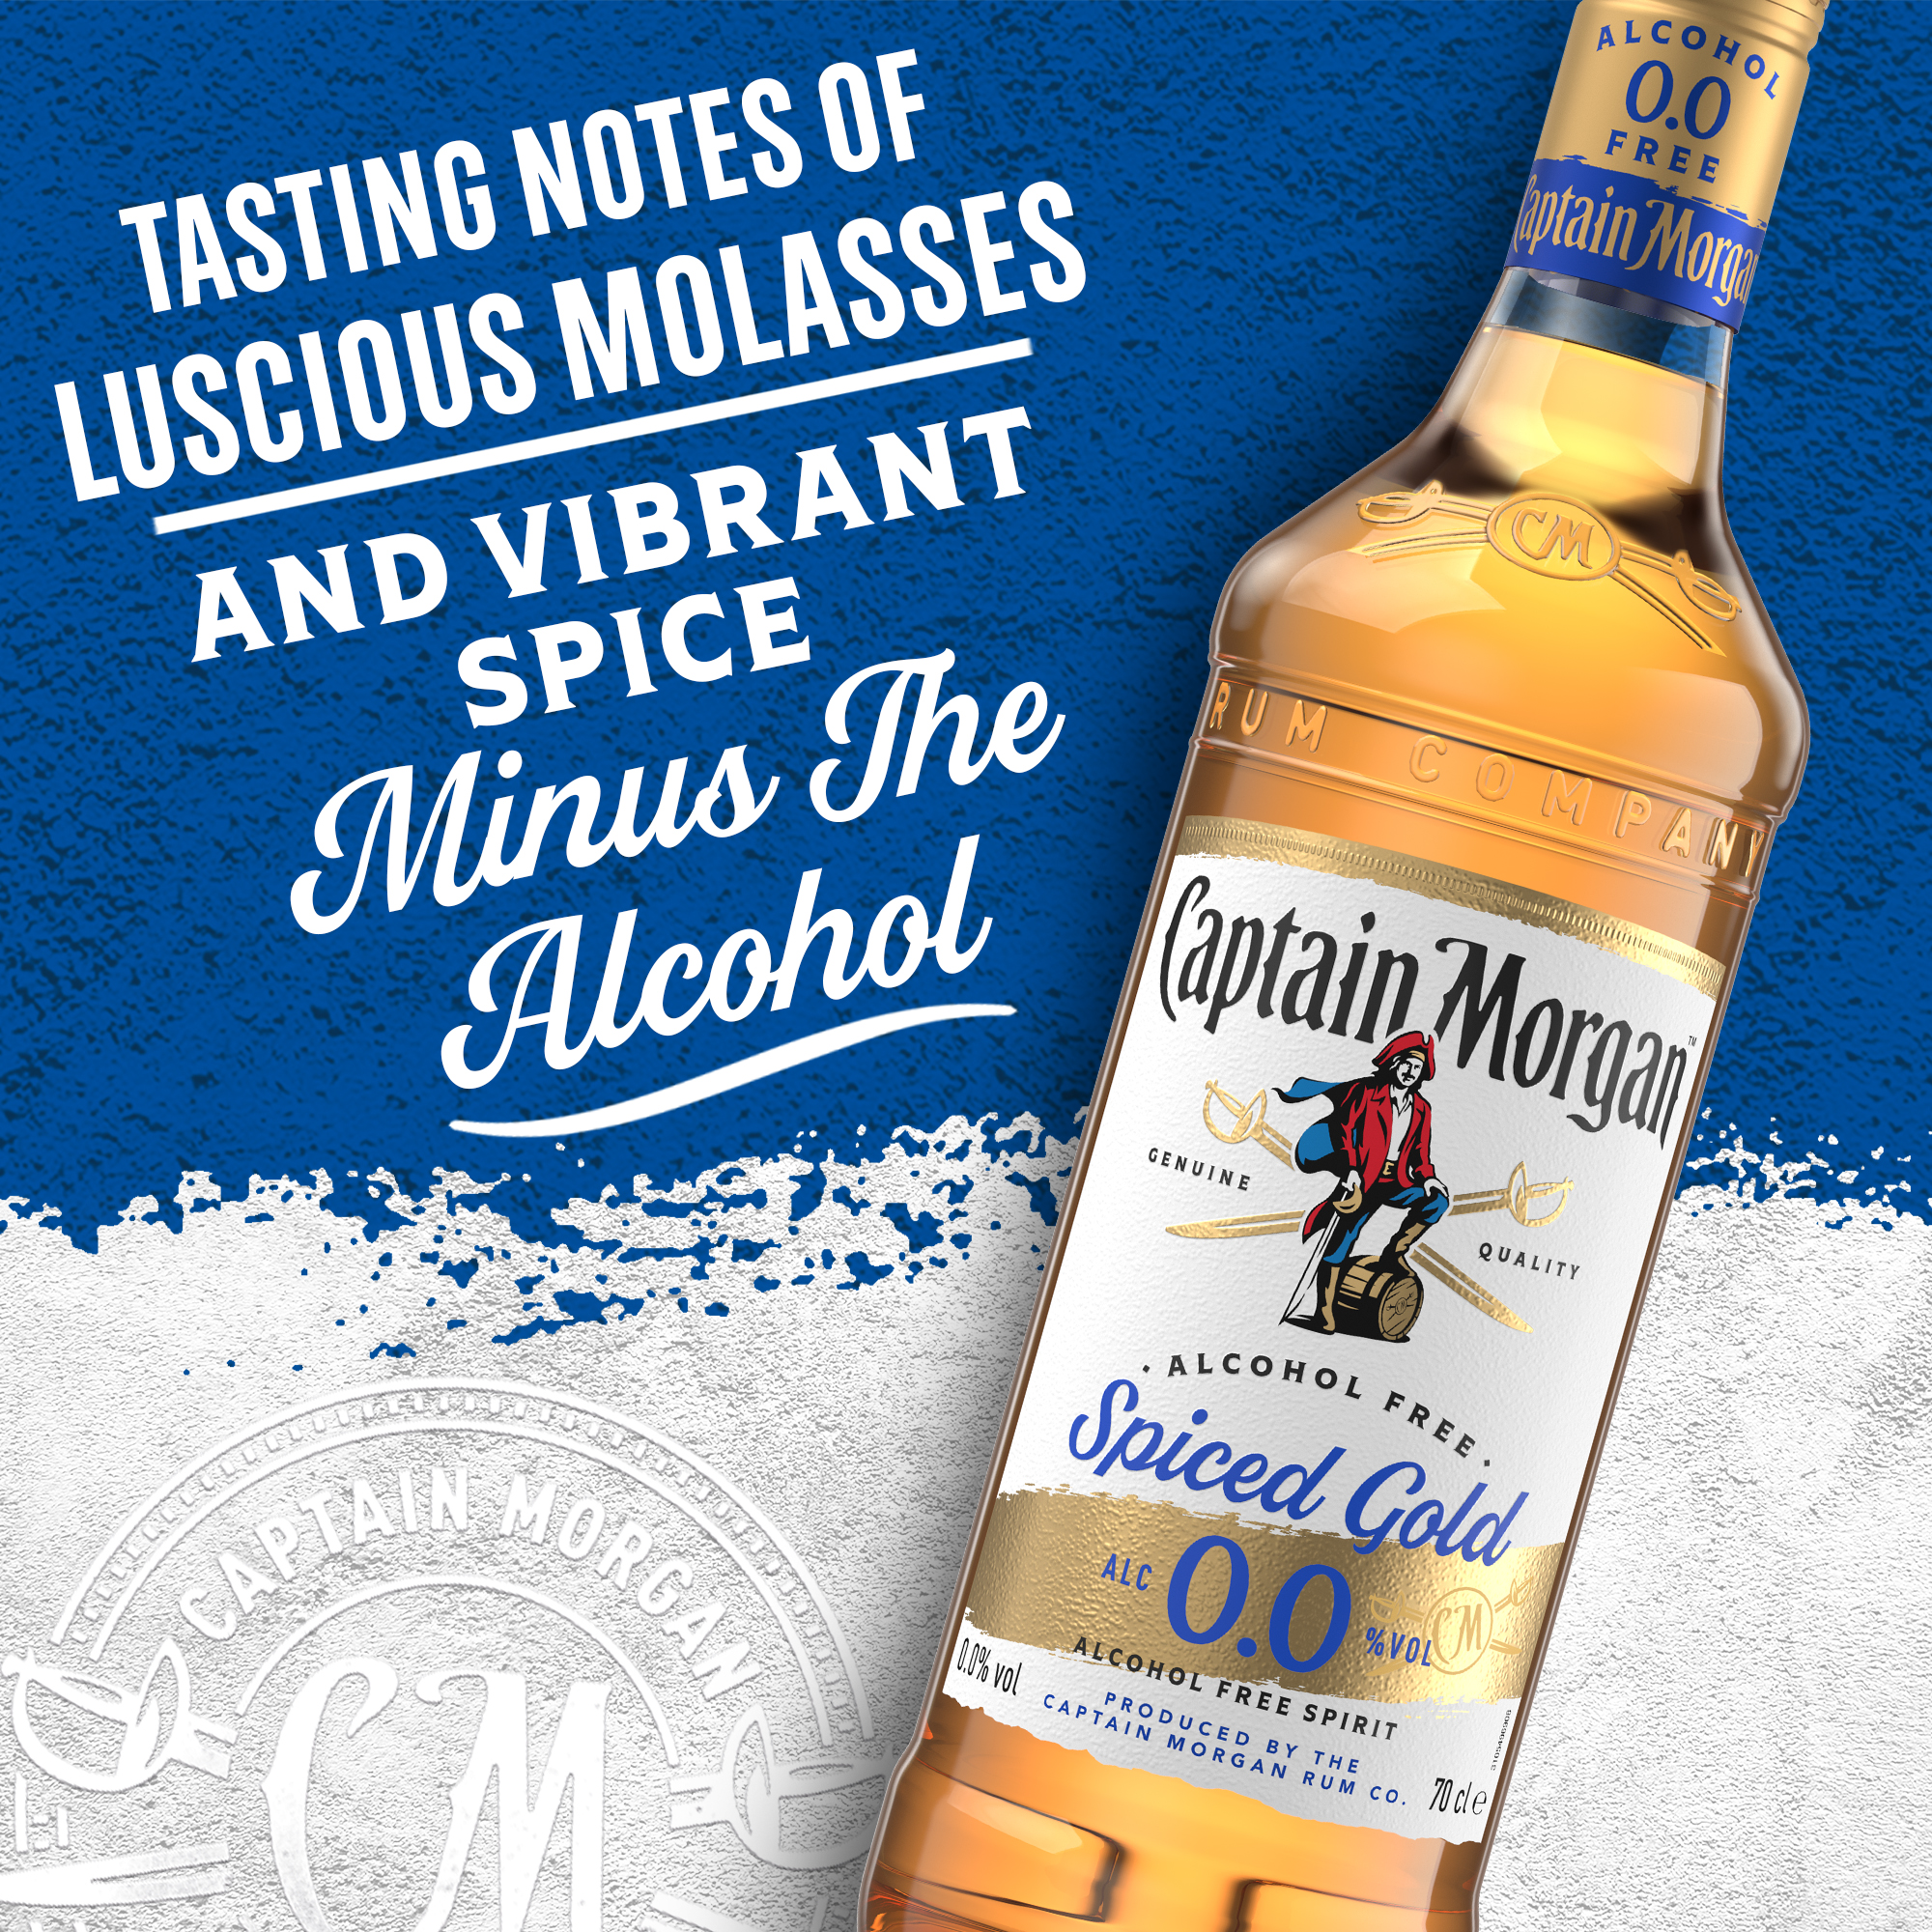 Captain Morgan Spiced Gold 0.0 Alcohol Free Spirit, 70cl | The Bar